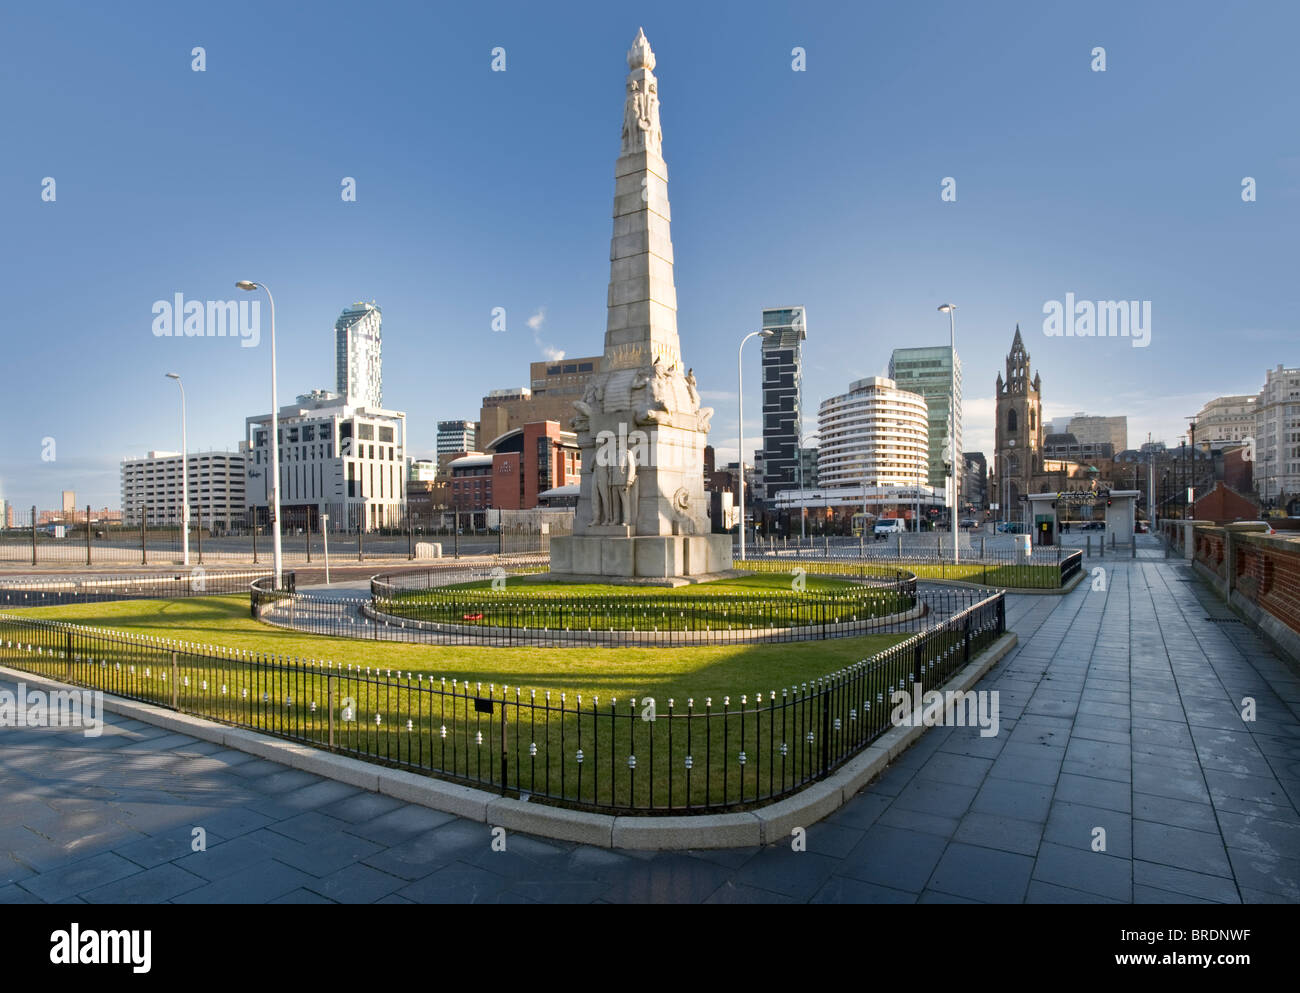 Le Titanic Memorial, Pier Head, Liverpool, Merseyside, England, UK Banque D'Images